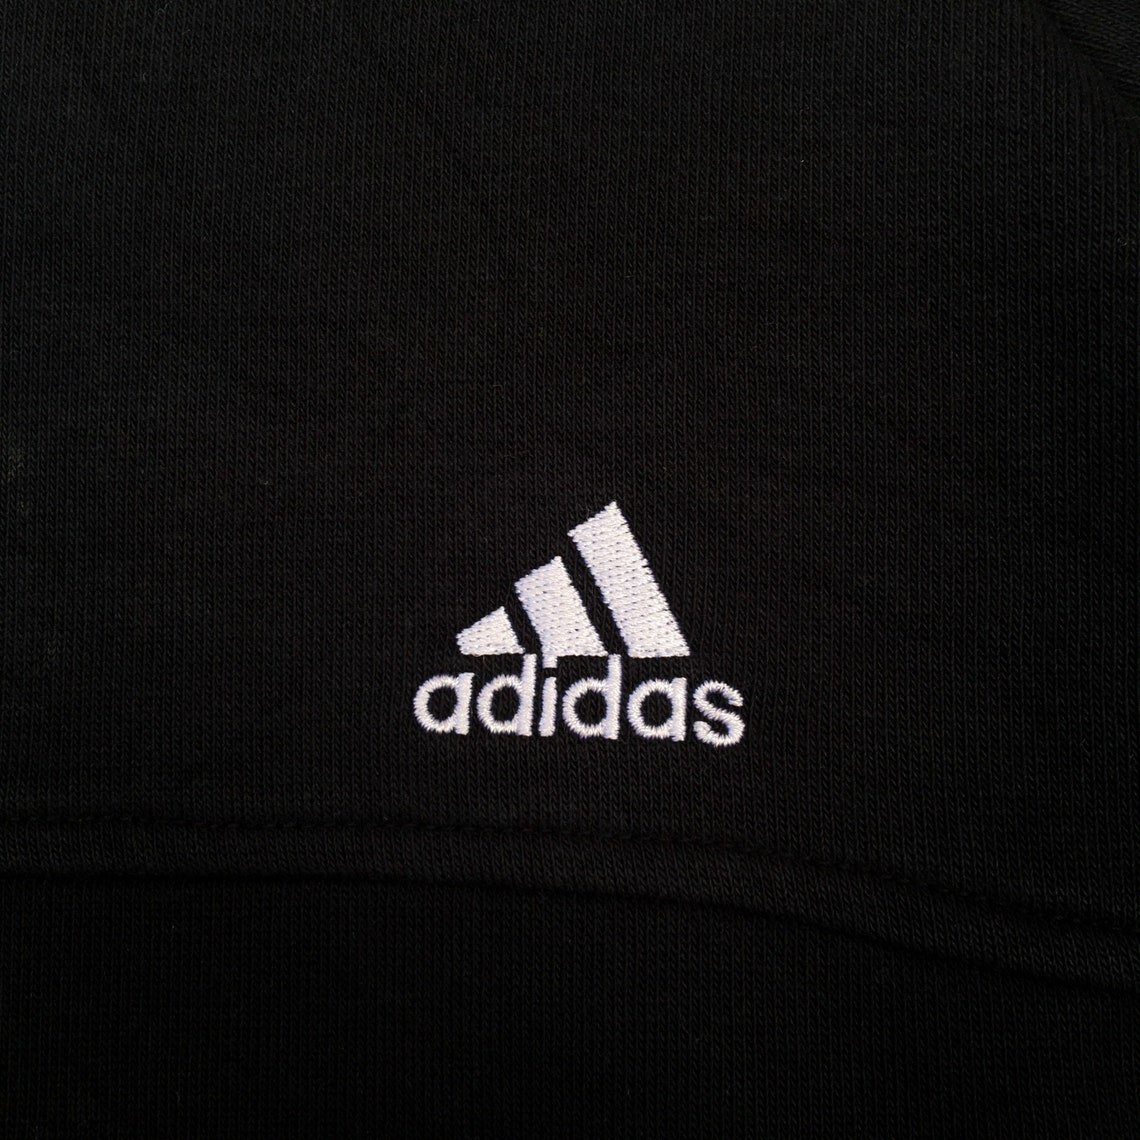 Adidas Sweatshirt Pullover Jumper Embroidery Logo / Adidas | Etsy